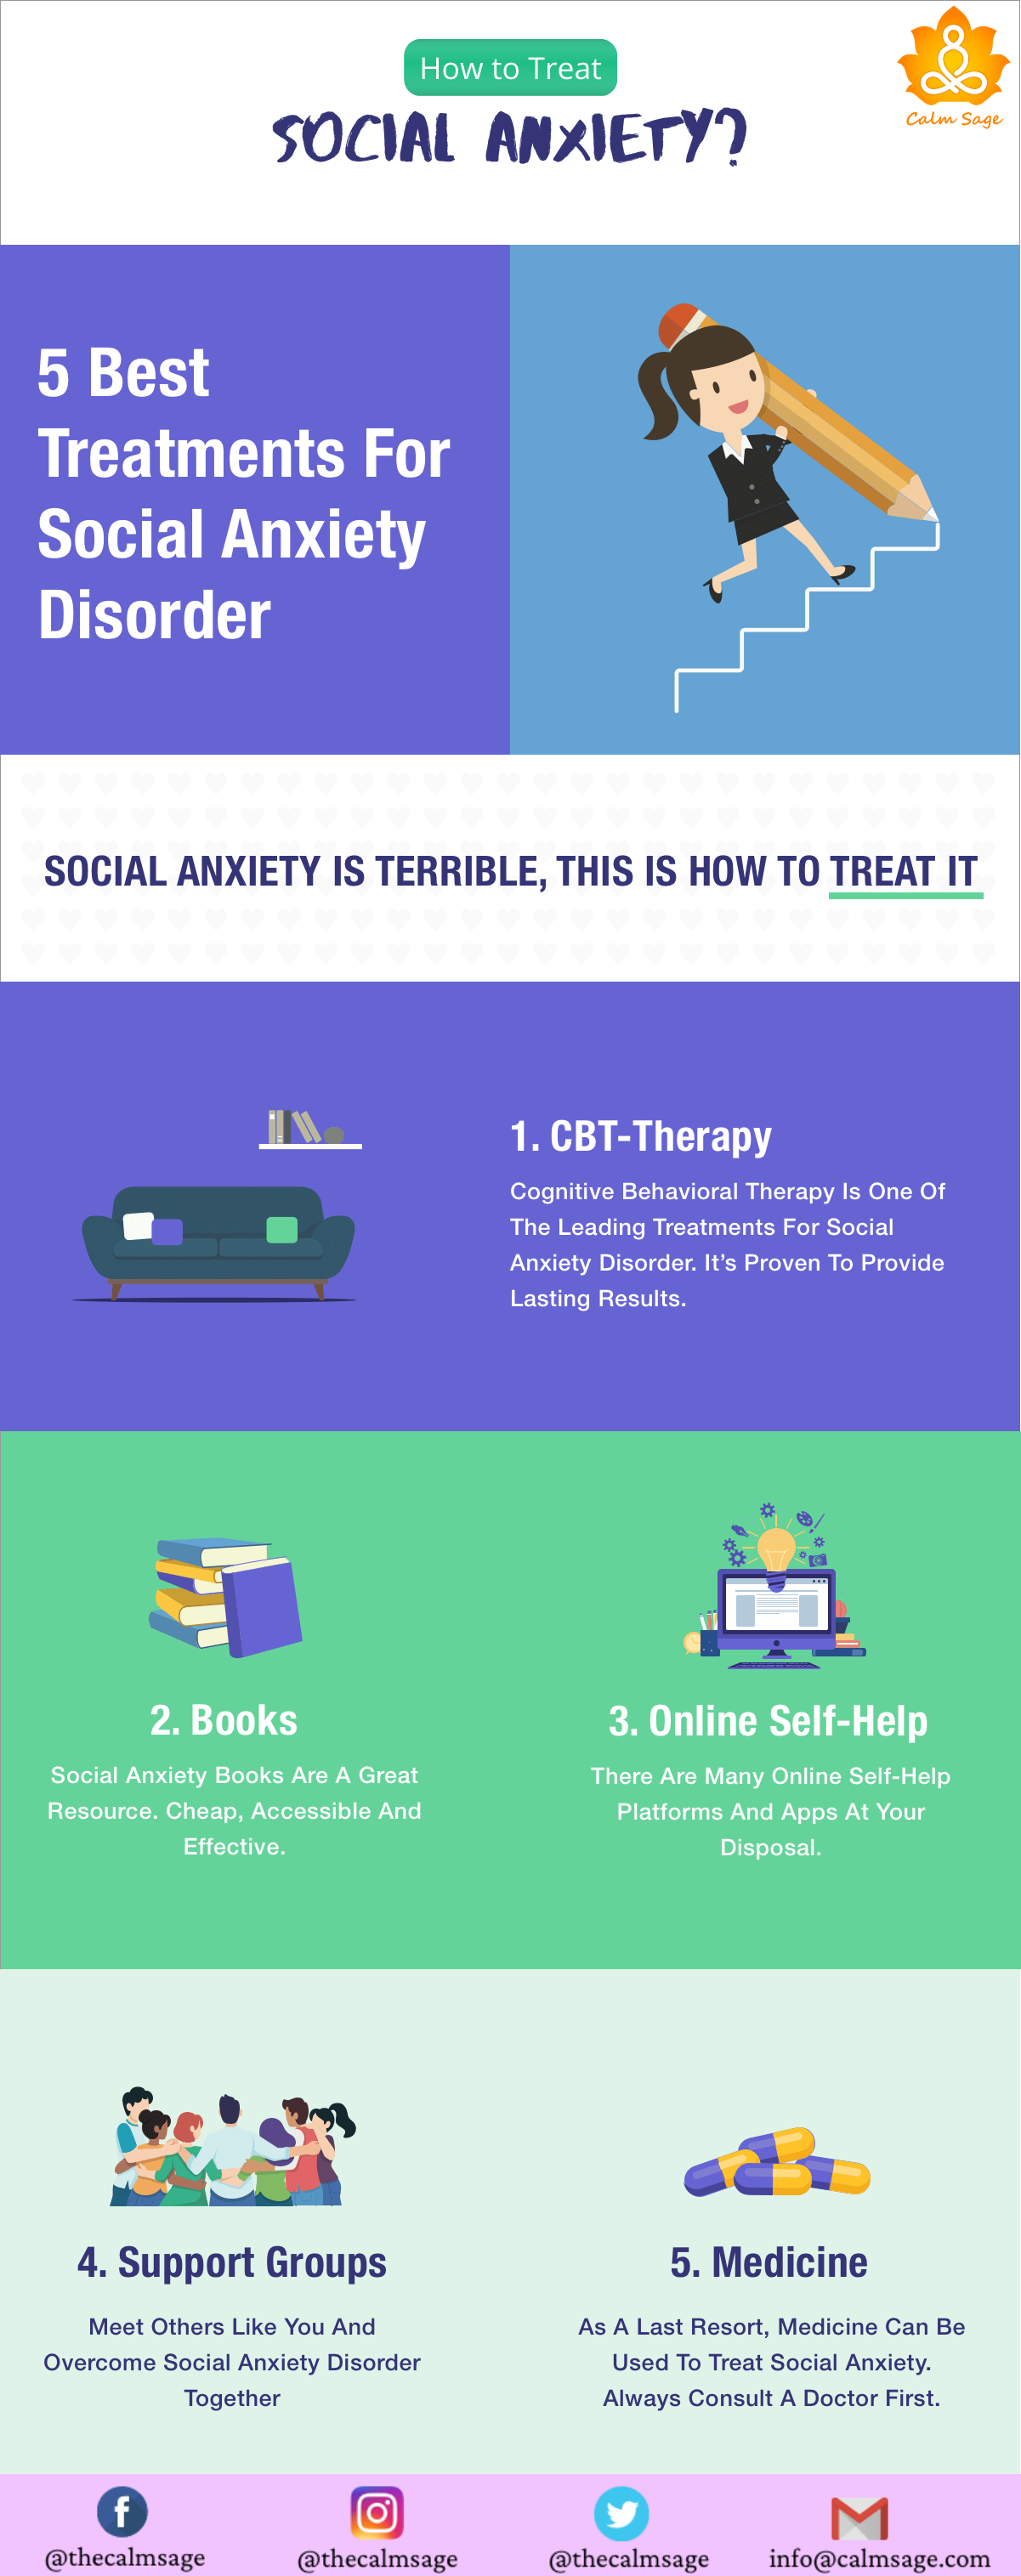 social anxiety symptoms